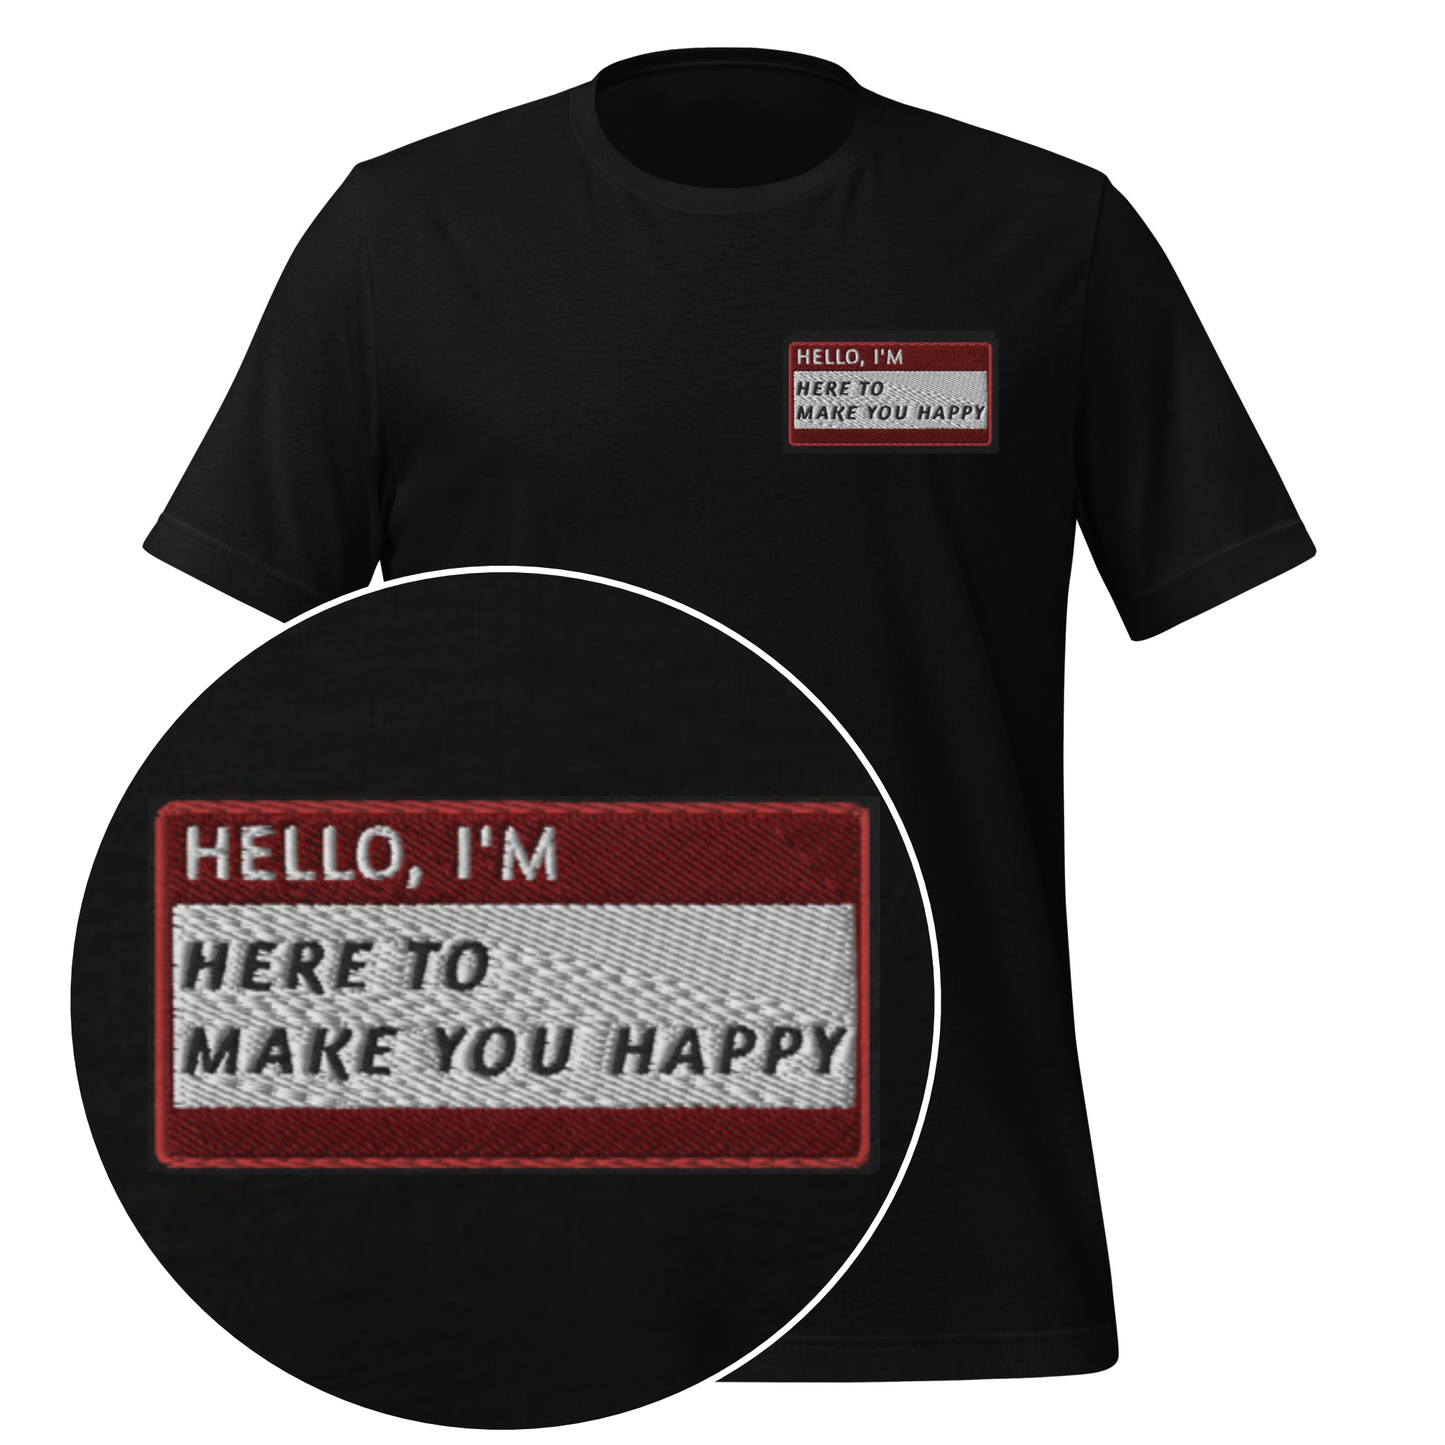 HELLO I'M HERE TO MAKE YOU HAPPY - Name Tag T-Shirt